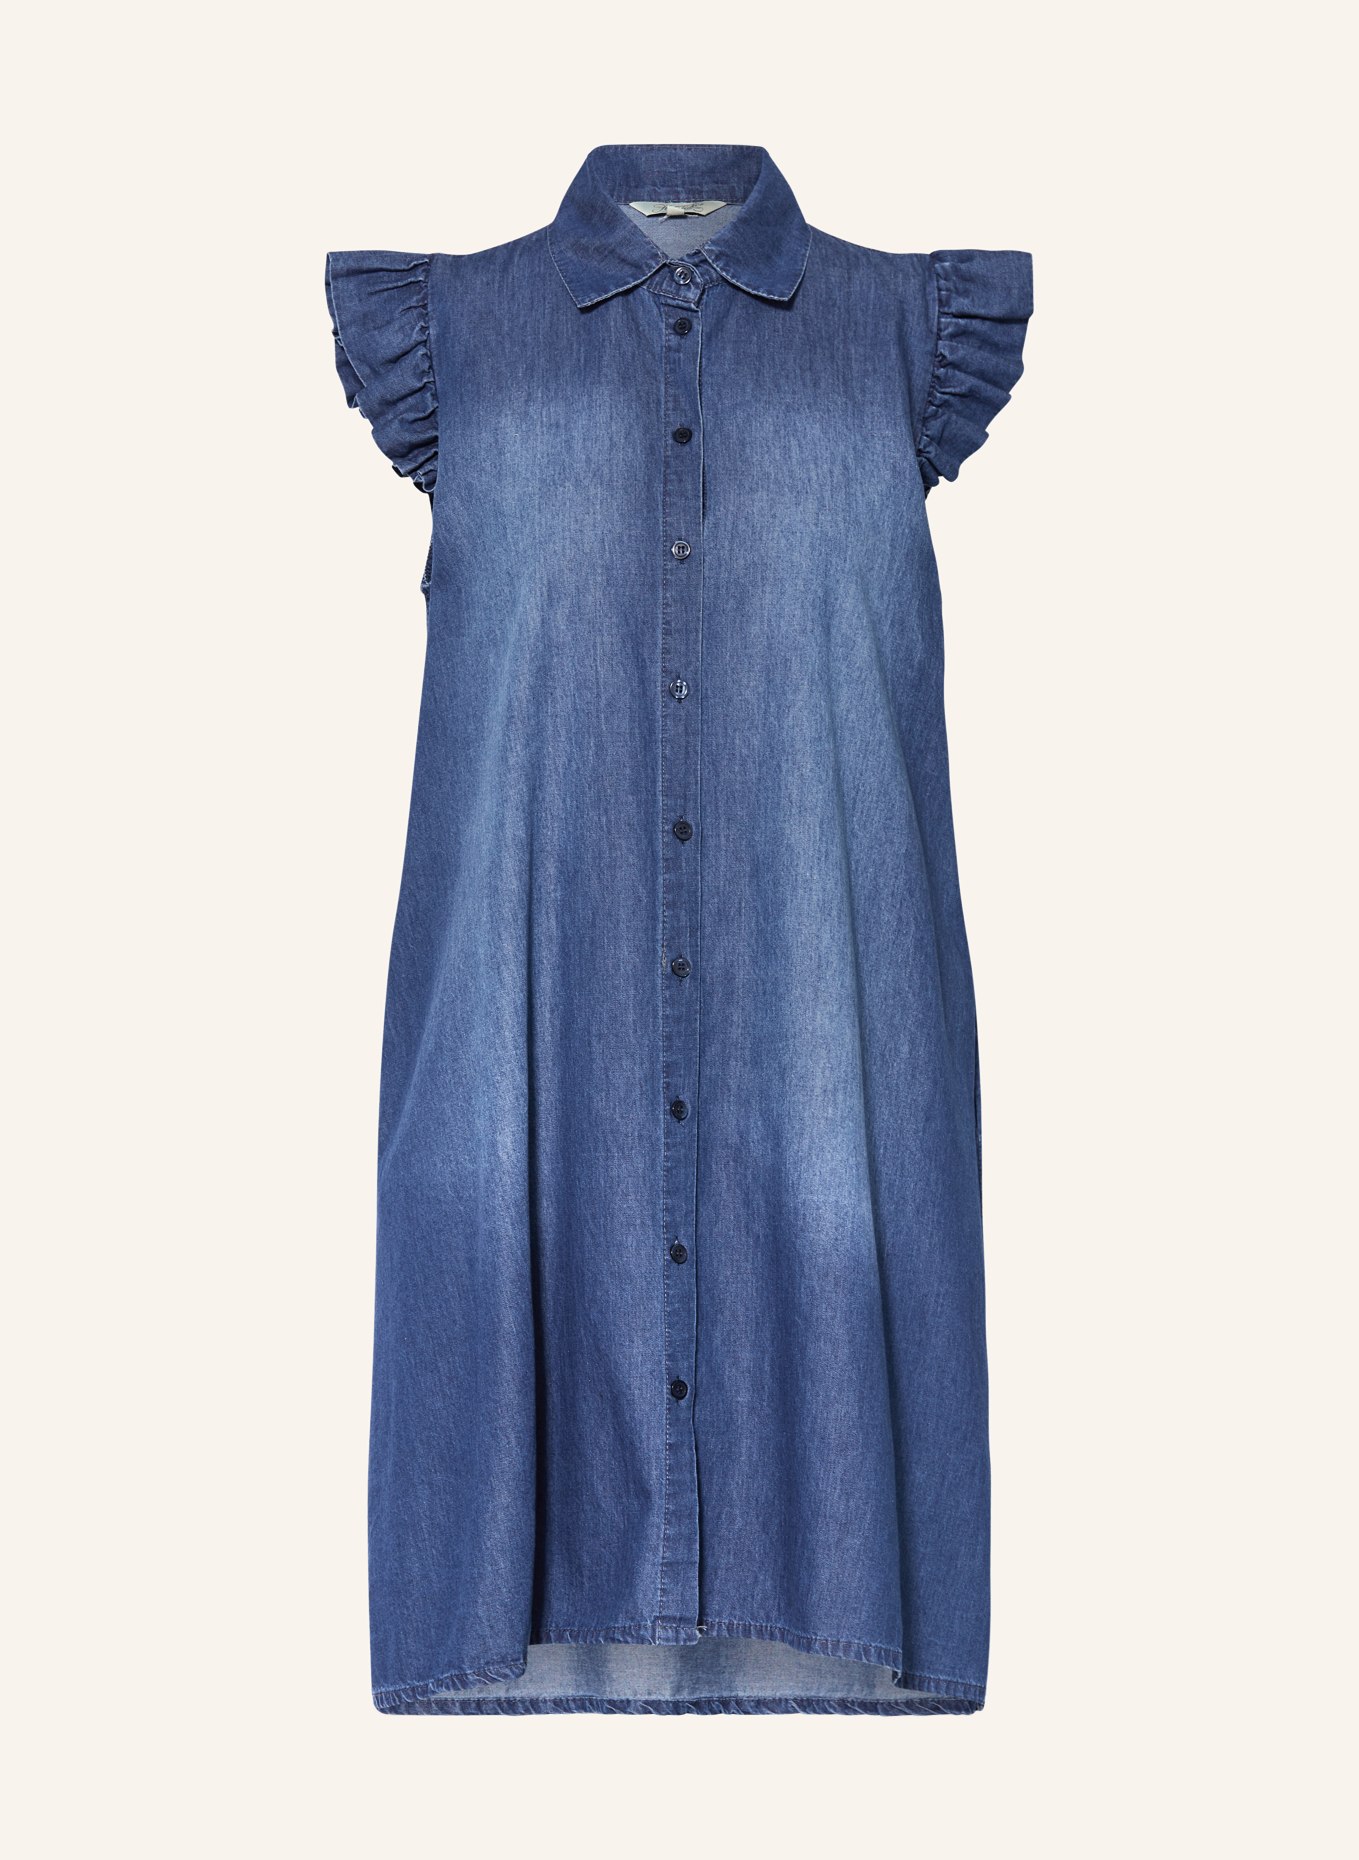 Herrlicher Hemdblusenkleid MARLIE in Jeansoptik, Farbe: 055 medium (Bild 1)